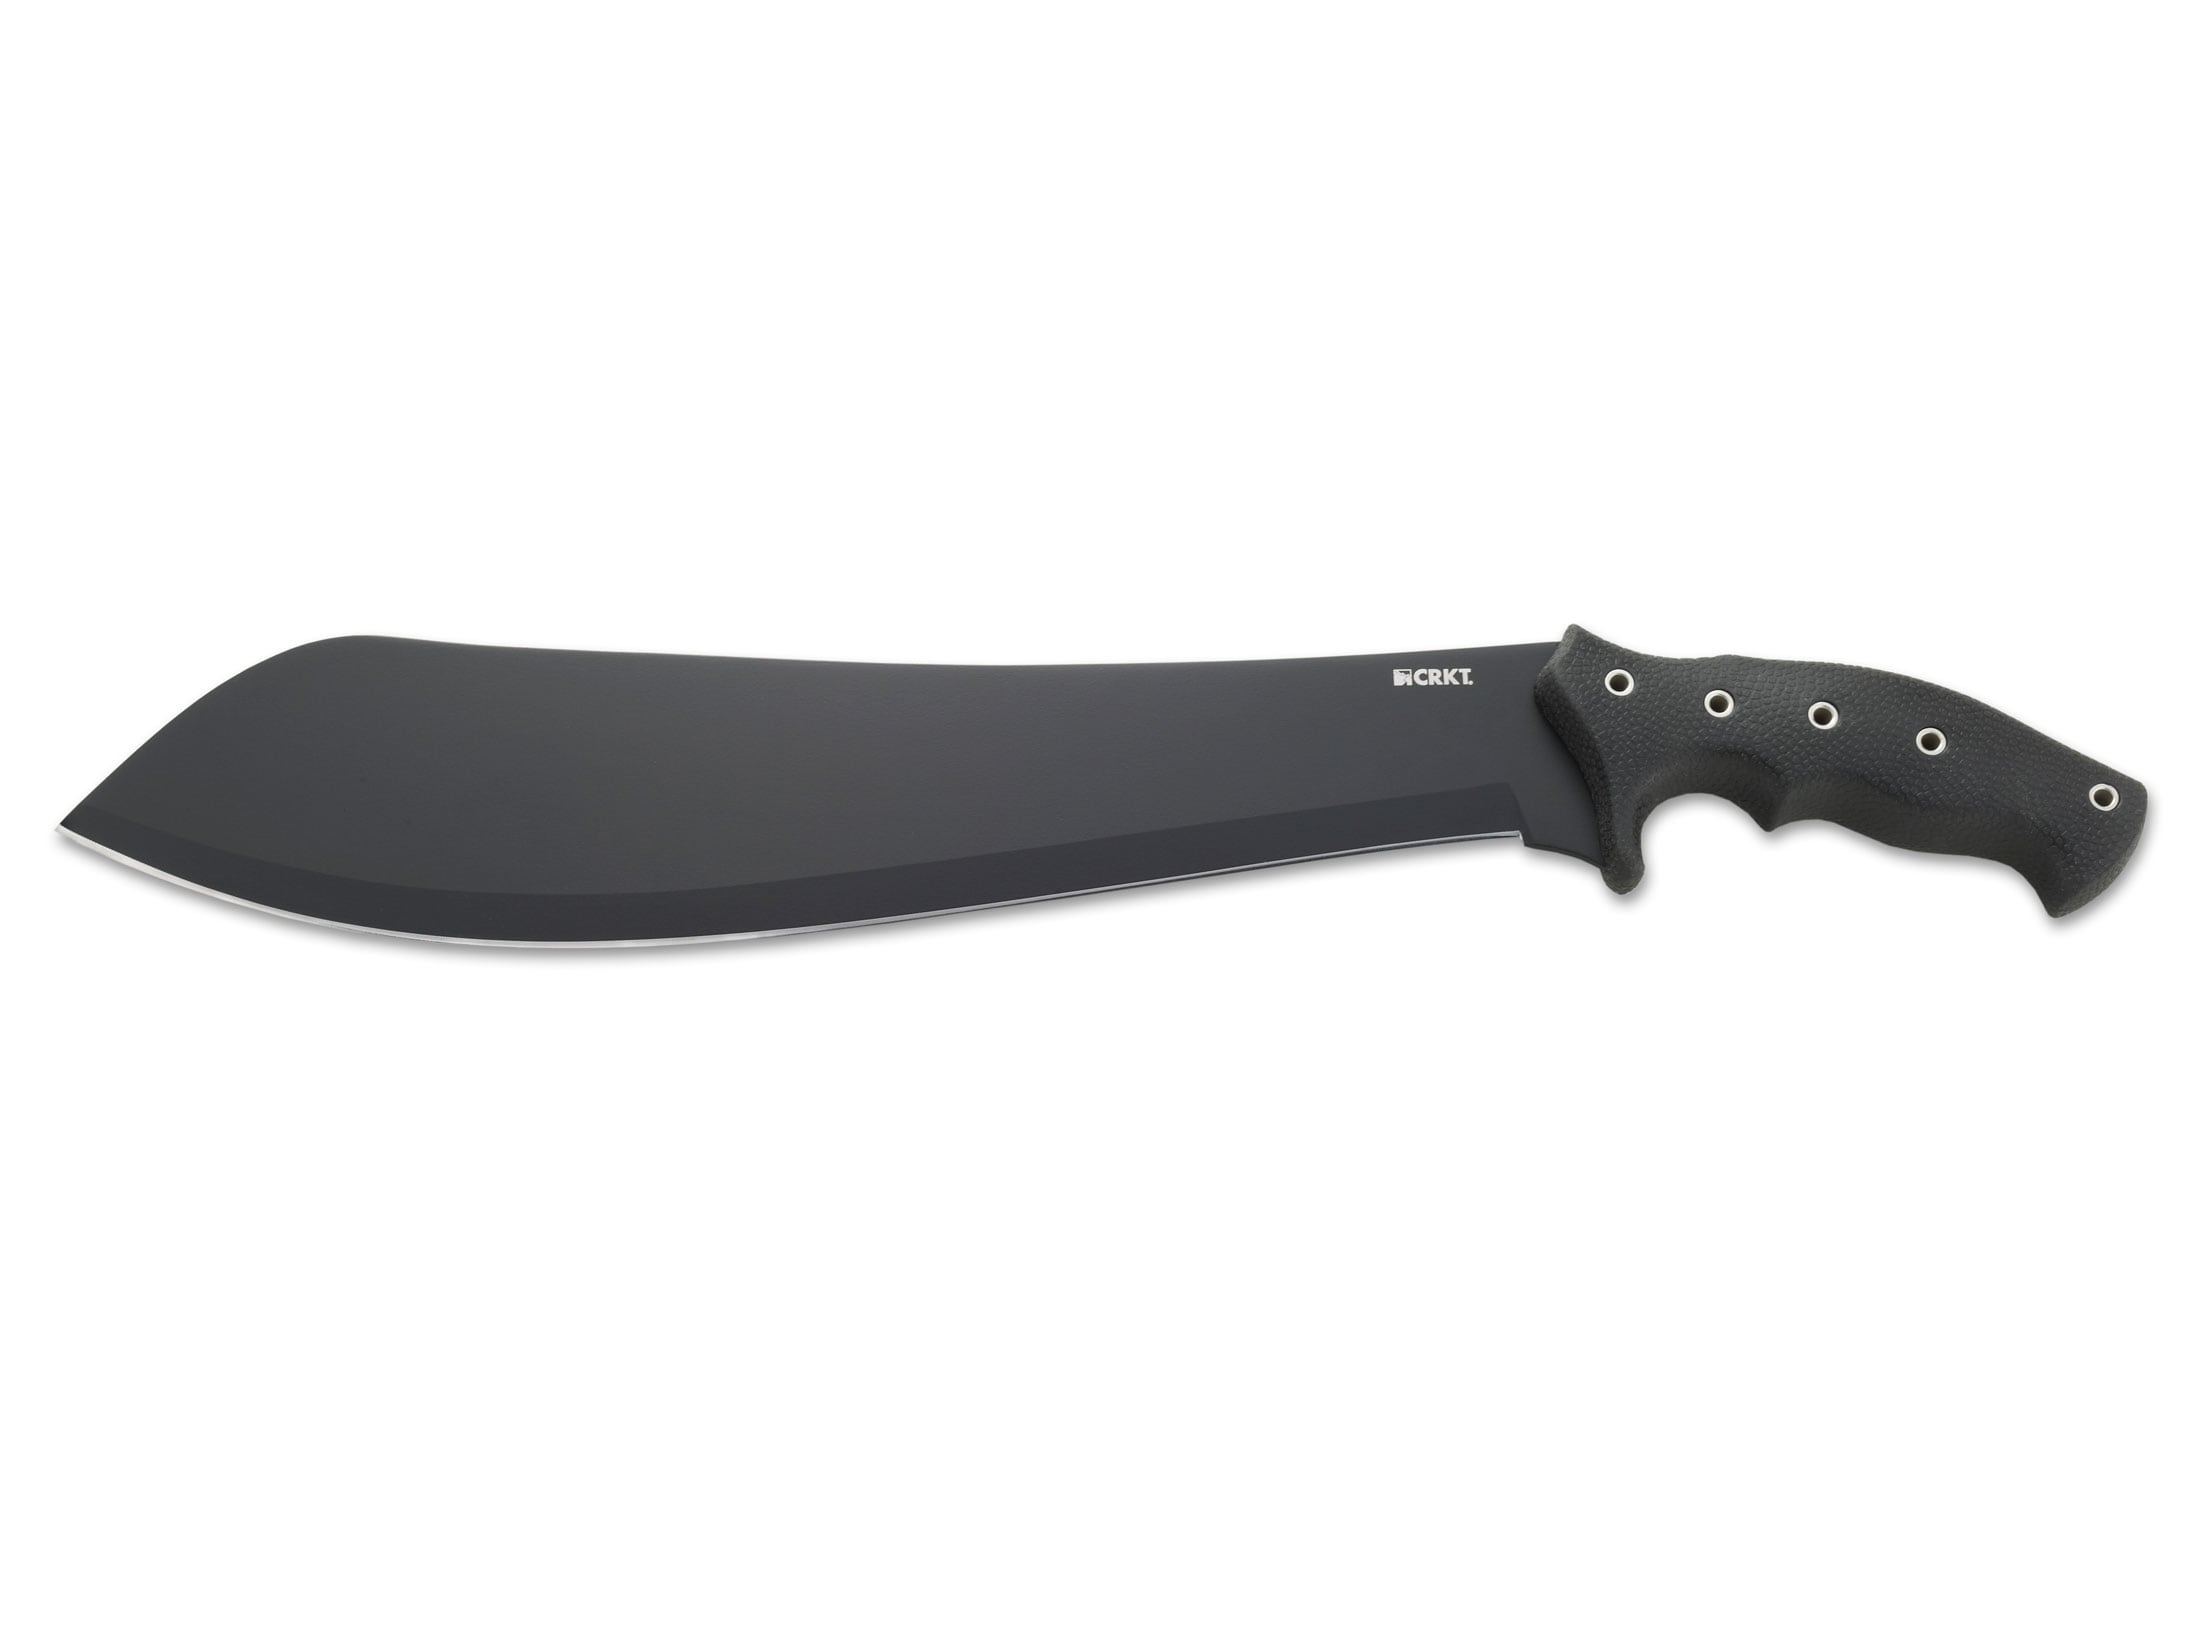 CRKT Halfachance Parang Machete 19.5″ 65Mn Carbon Steel Blade TPR Overmolded Handle Black For Sale